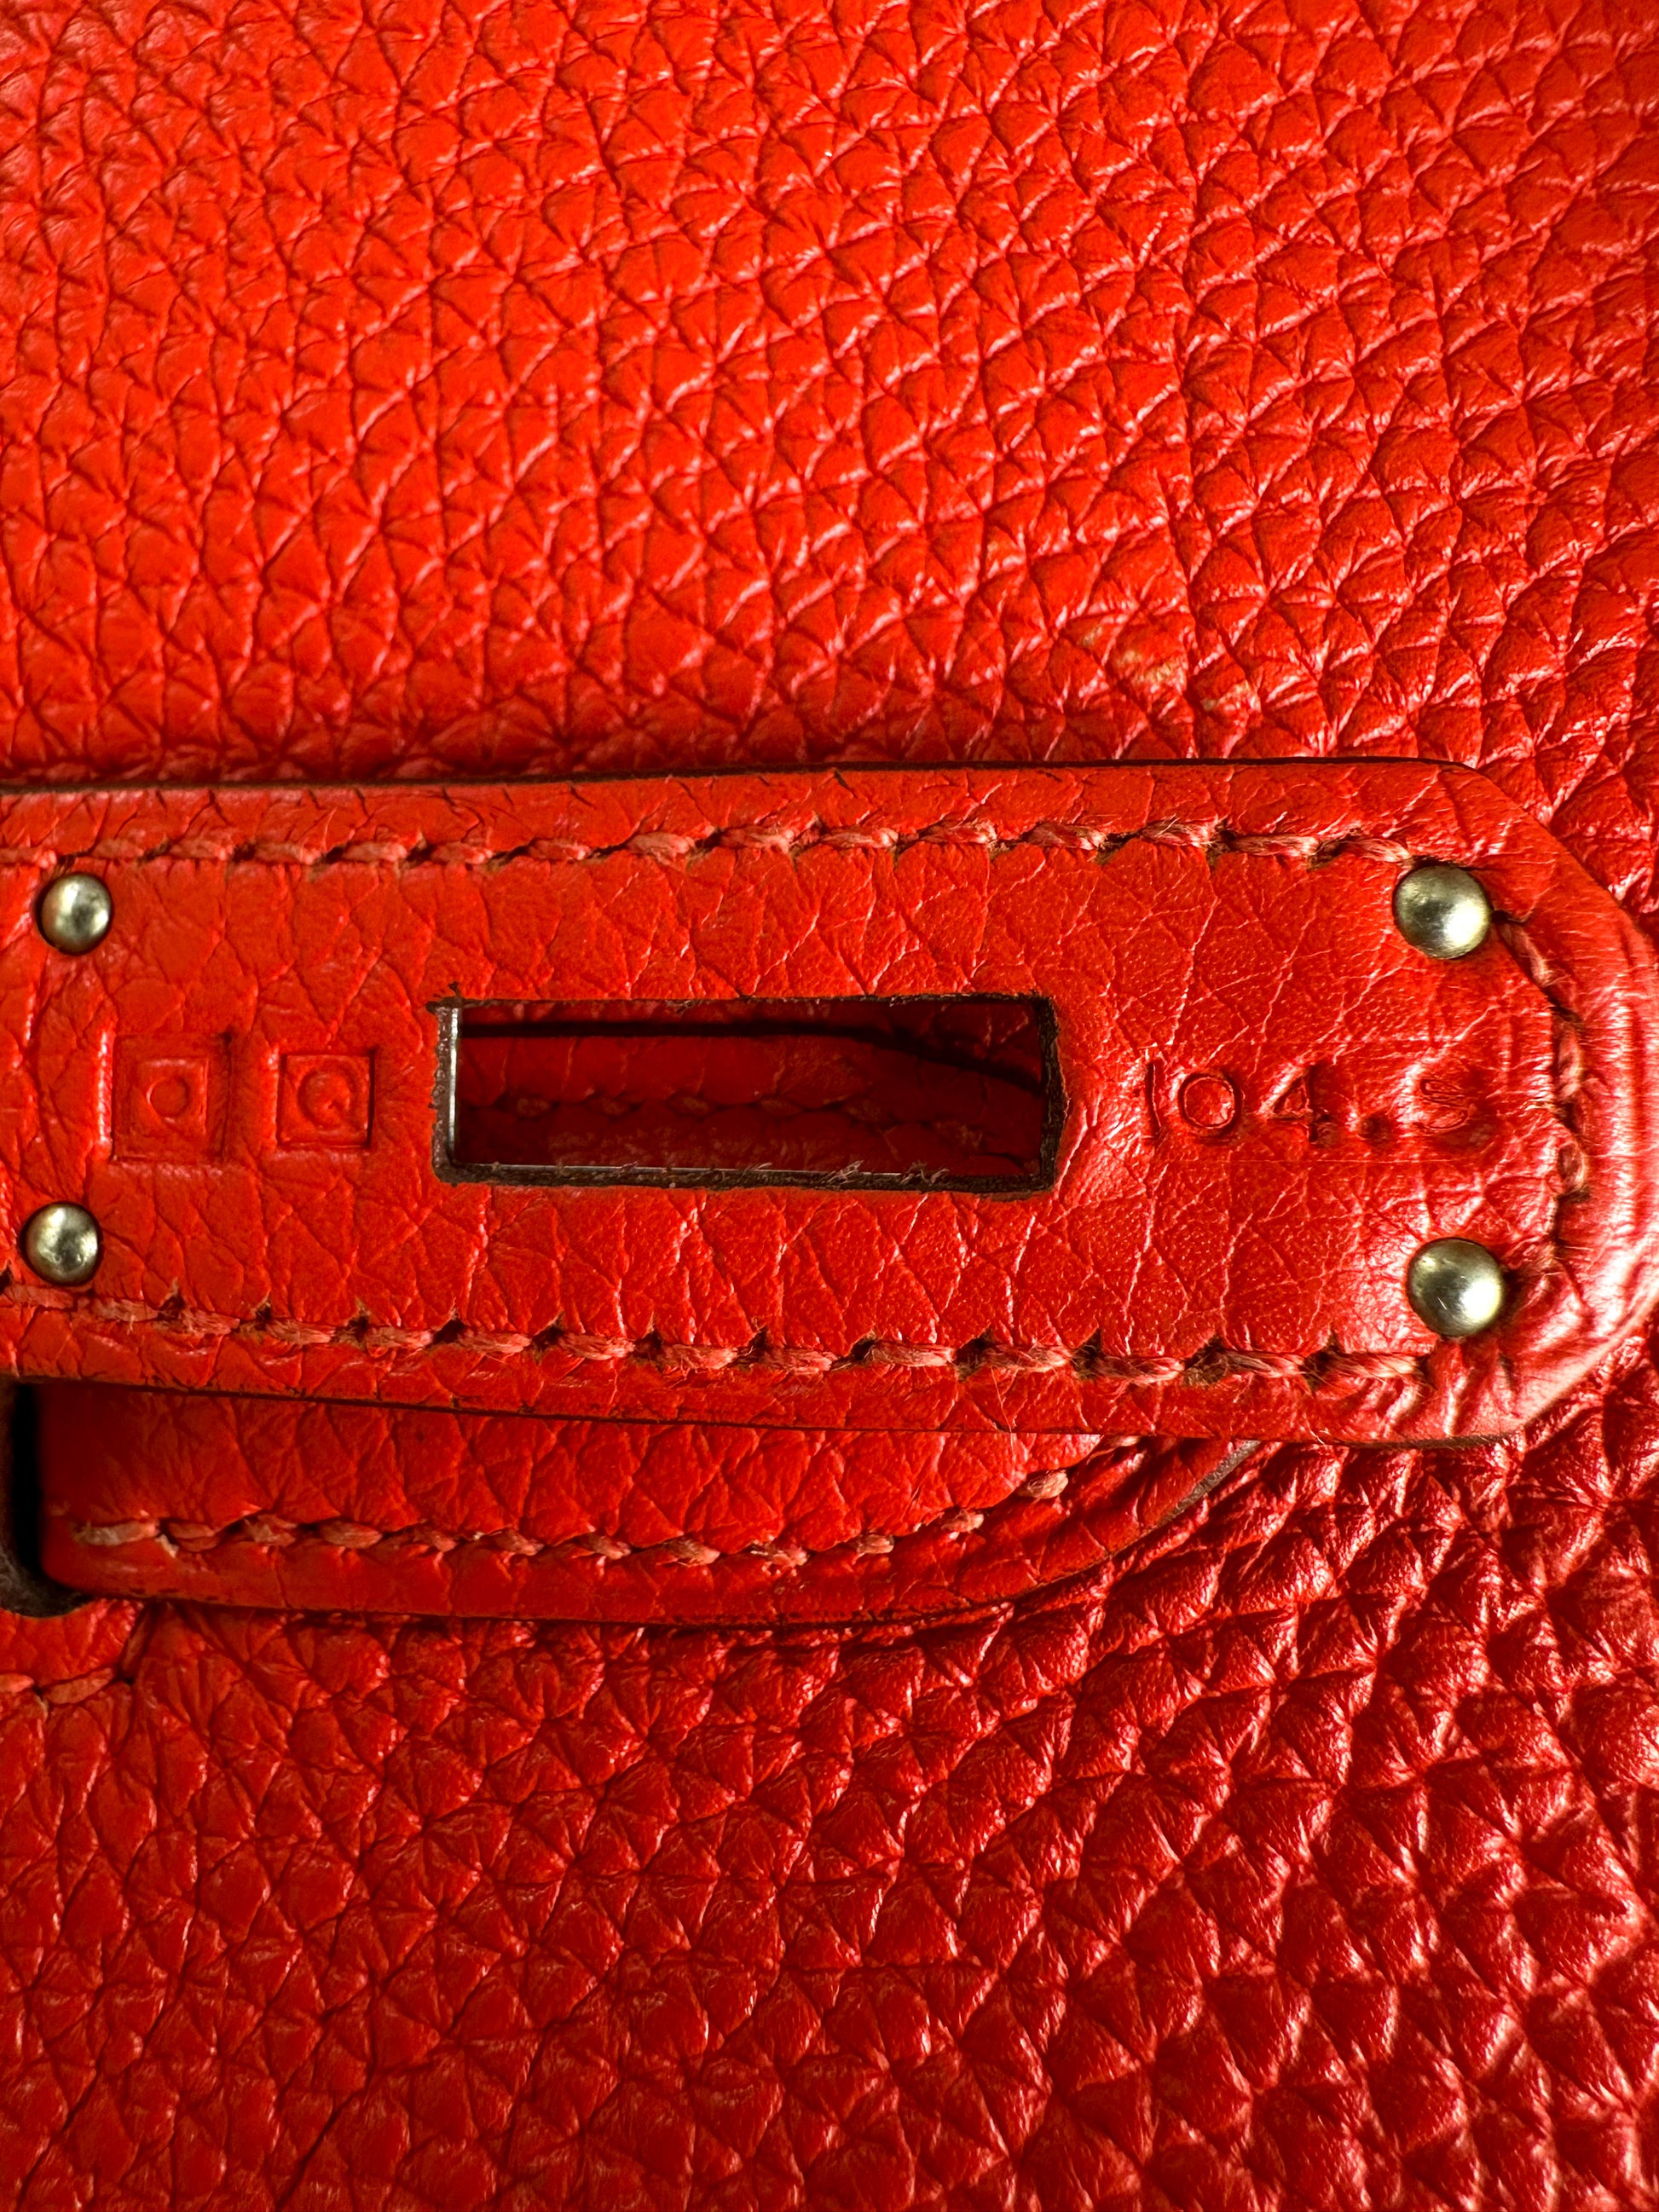 Hermes Birkin Capucine Togo Leather Handbag